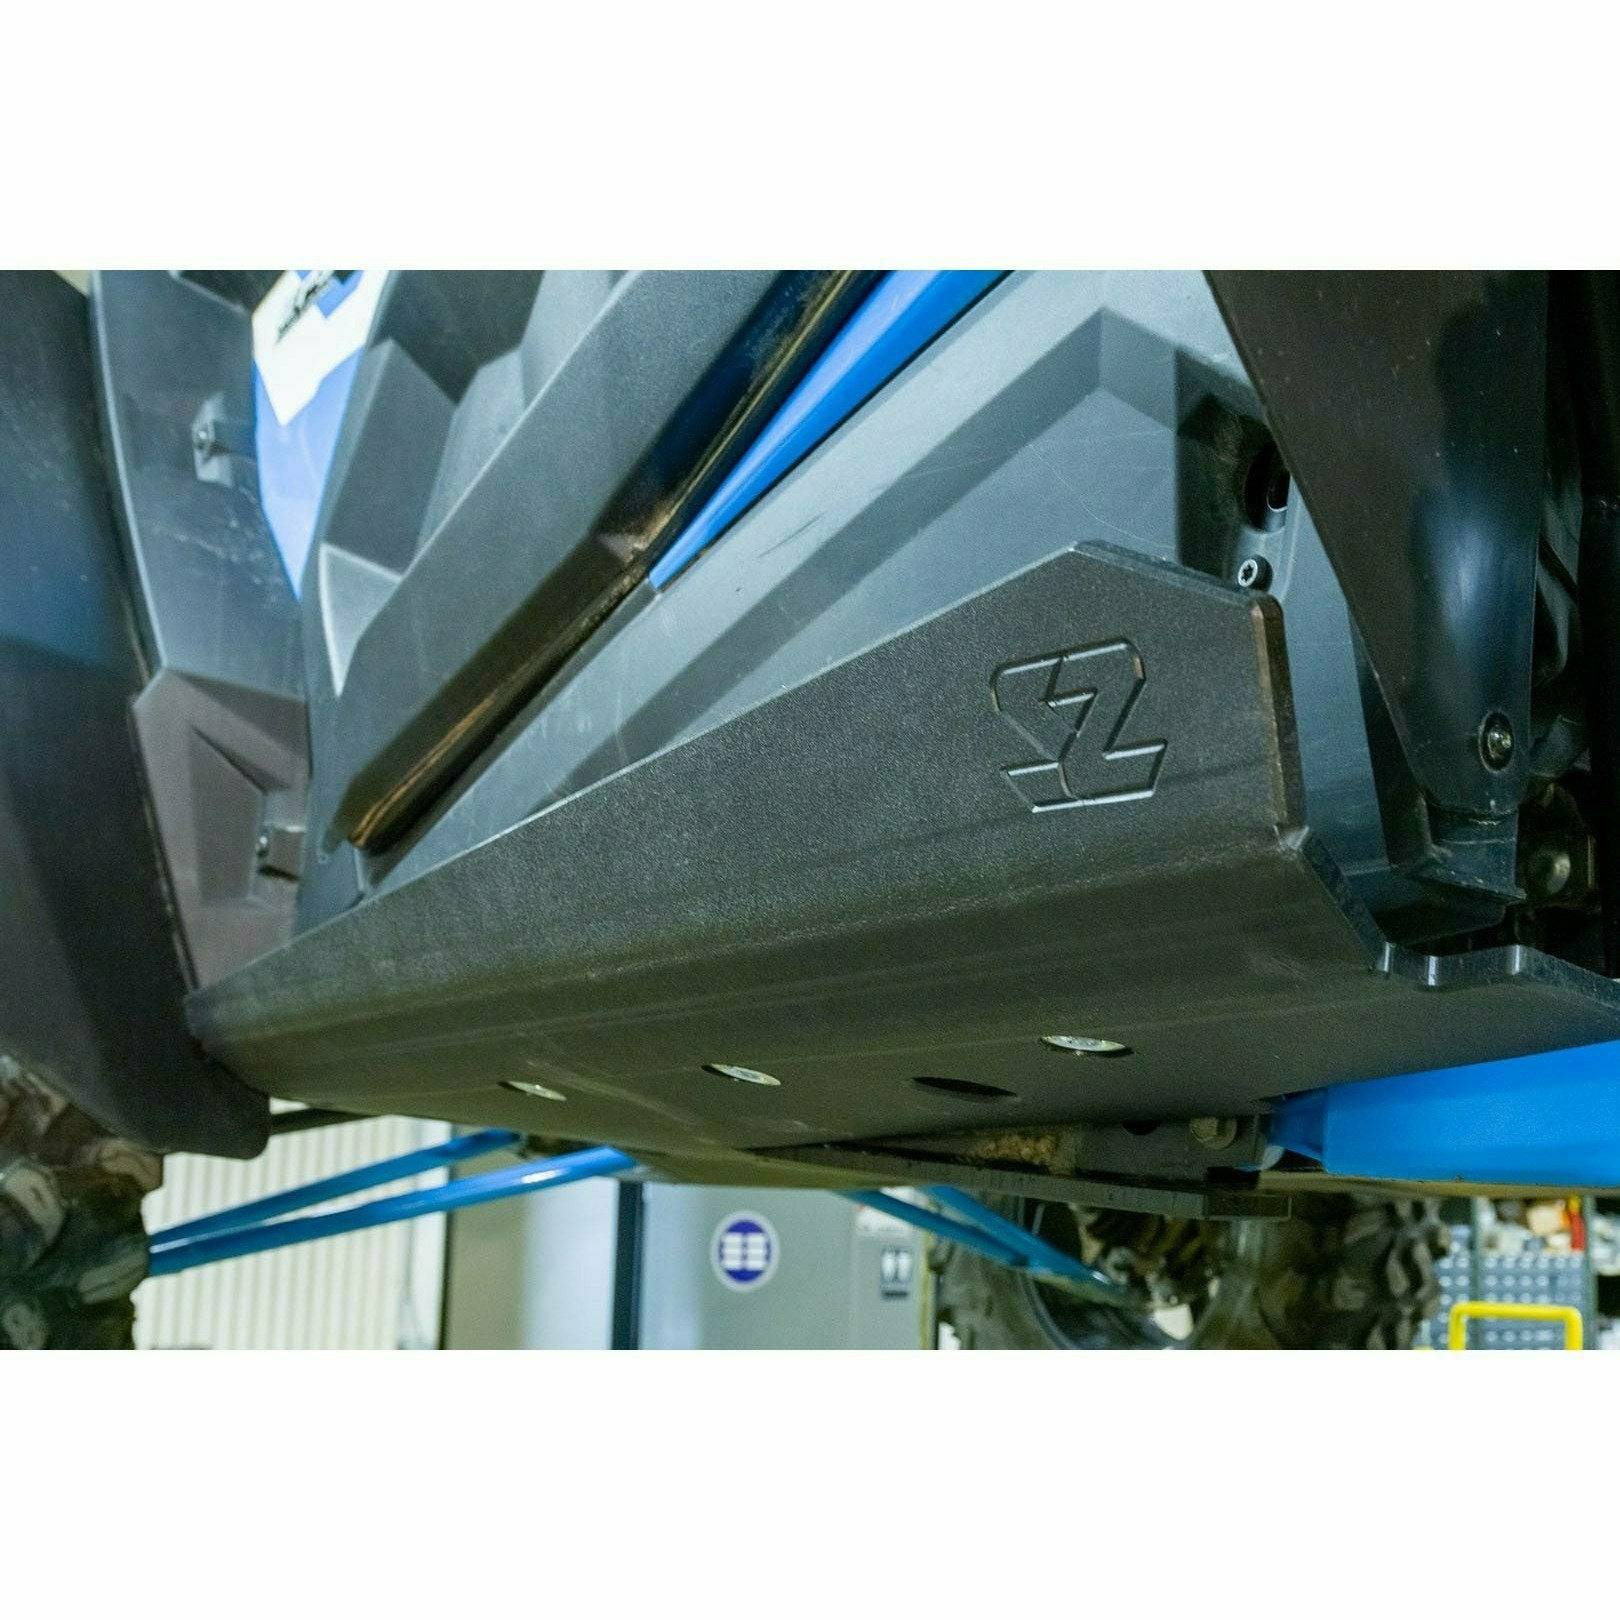 Seizmik Polaris RZR XP Turbo S UHMW Skid Plate with Integrated Rock Sliders